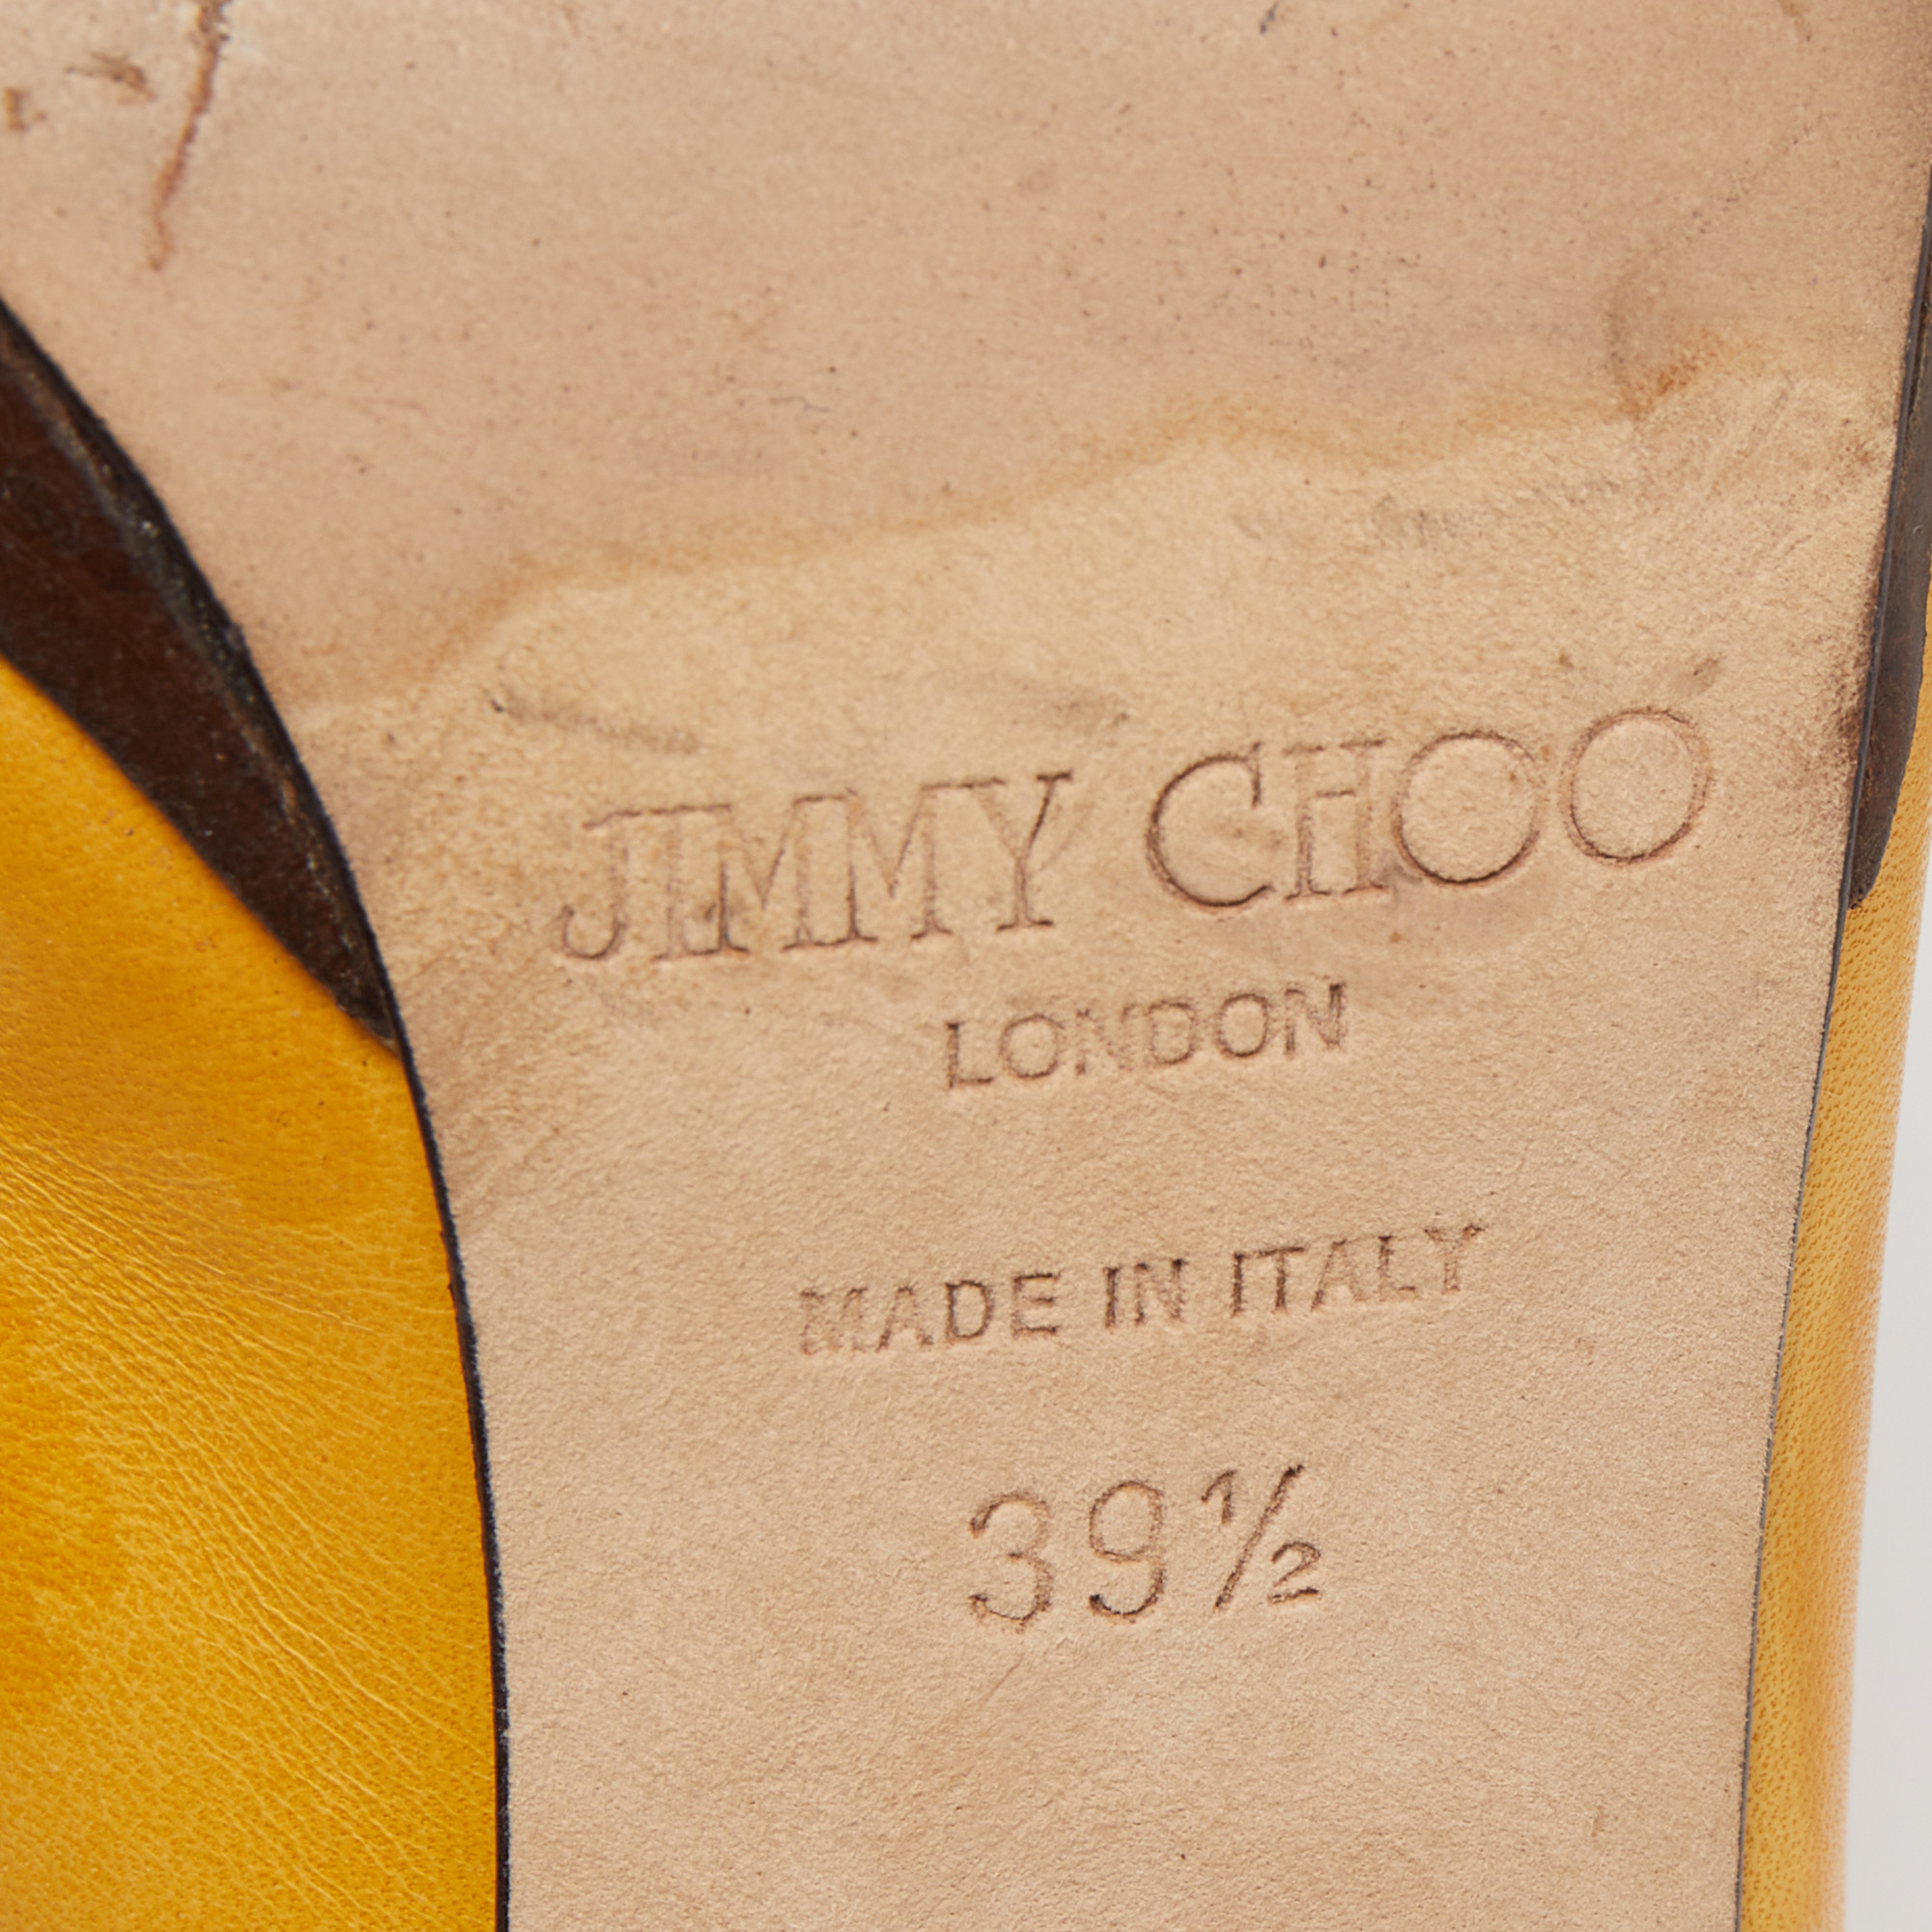 Jimmy Choo Yellow Leather Peep Toe Slingback Pumps Size 39.5